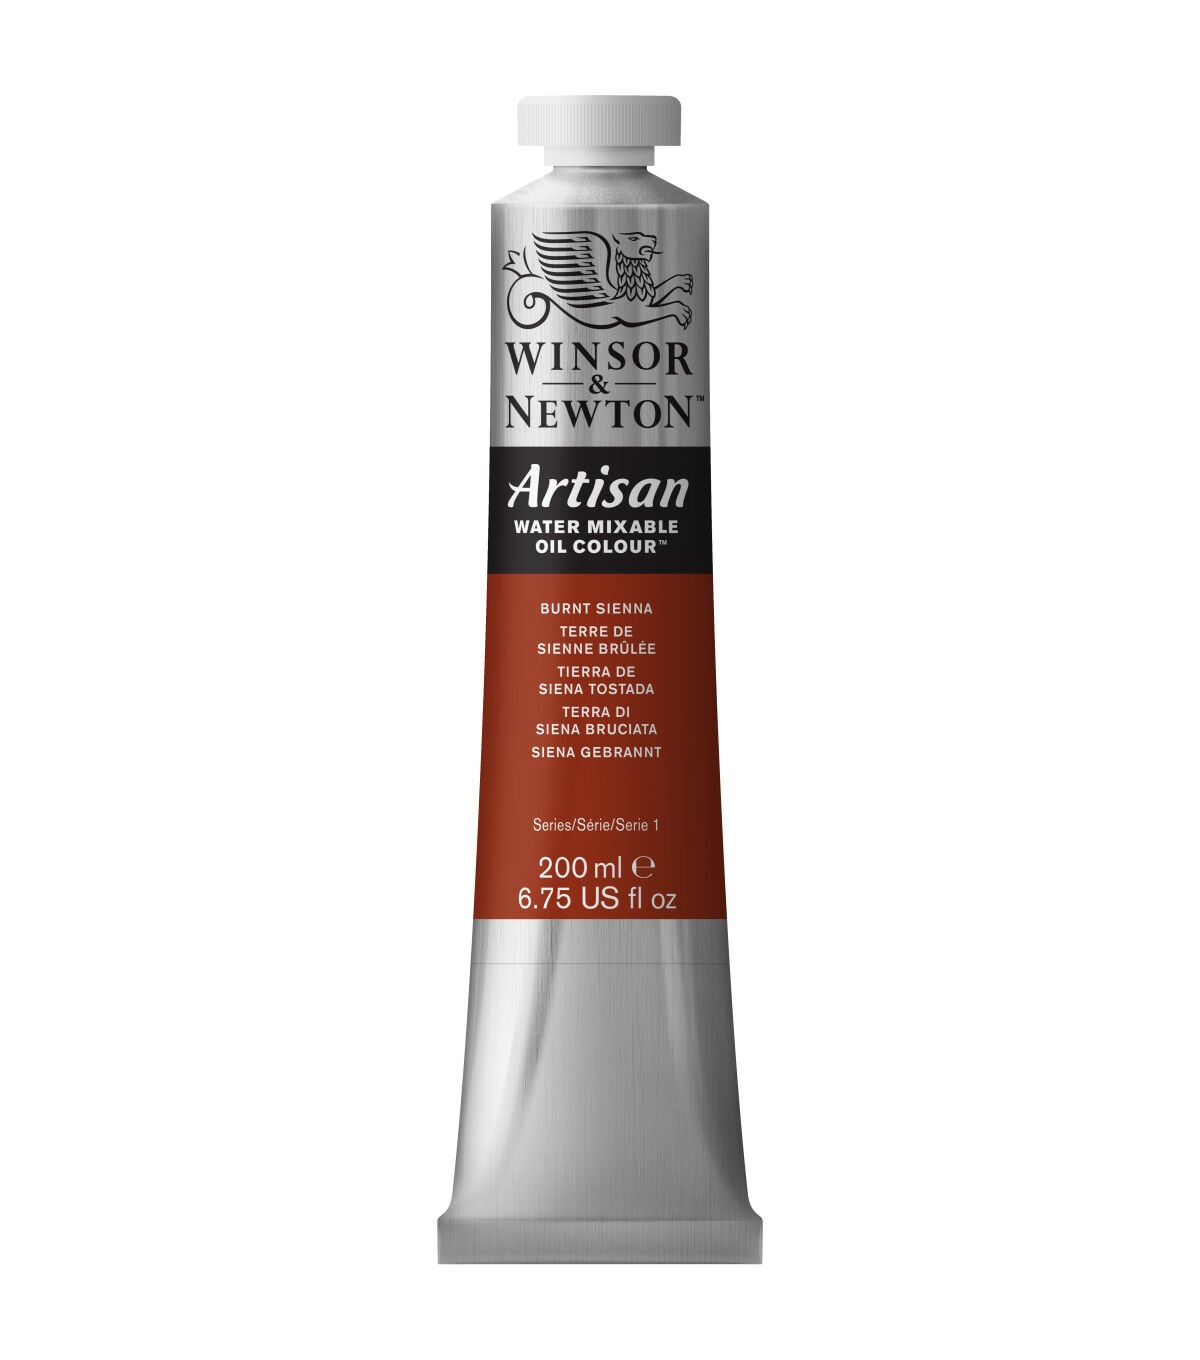 Winsor & Newton Artisan Water Mixable Oil Colours 200ml Tube | JOANN